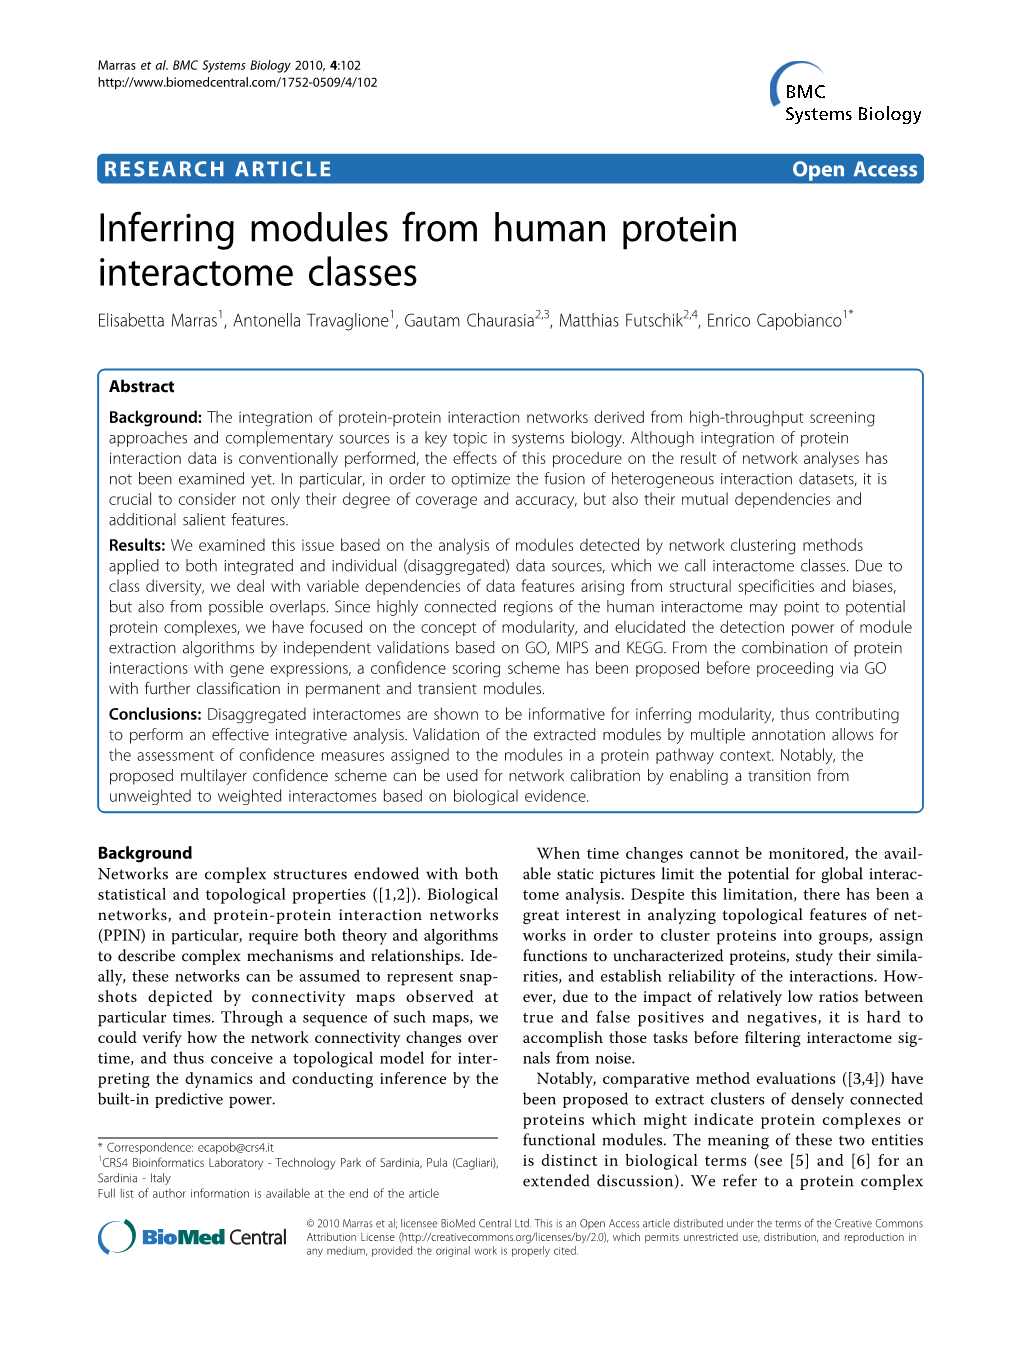 Inferring Modules from Human Protein Interactome Classes Elisabetta Marras1, Antonella Travaglione1, Gautam Chaurasia2,3, Matthias Futschik2,4, Enrico Capobianco1*